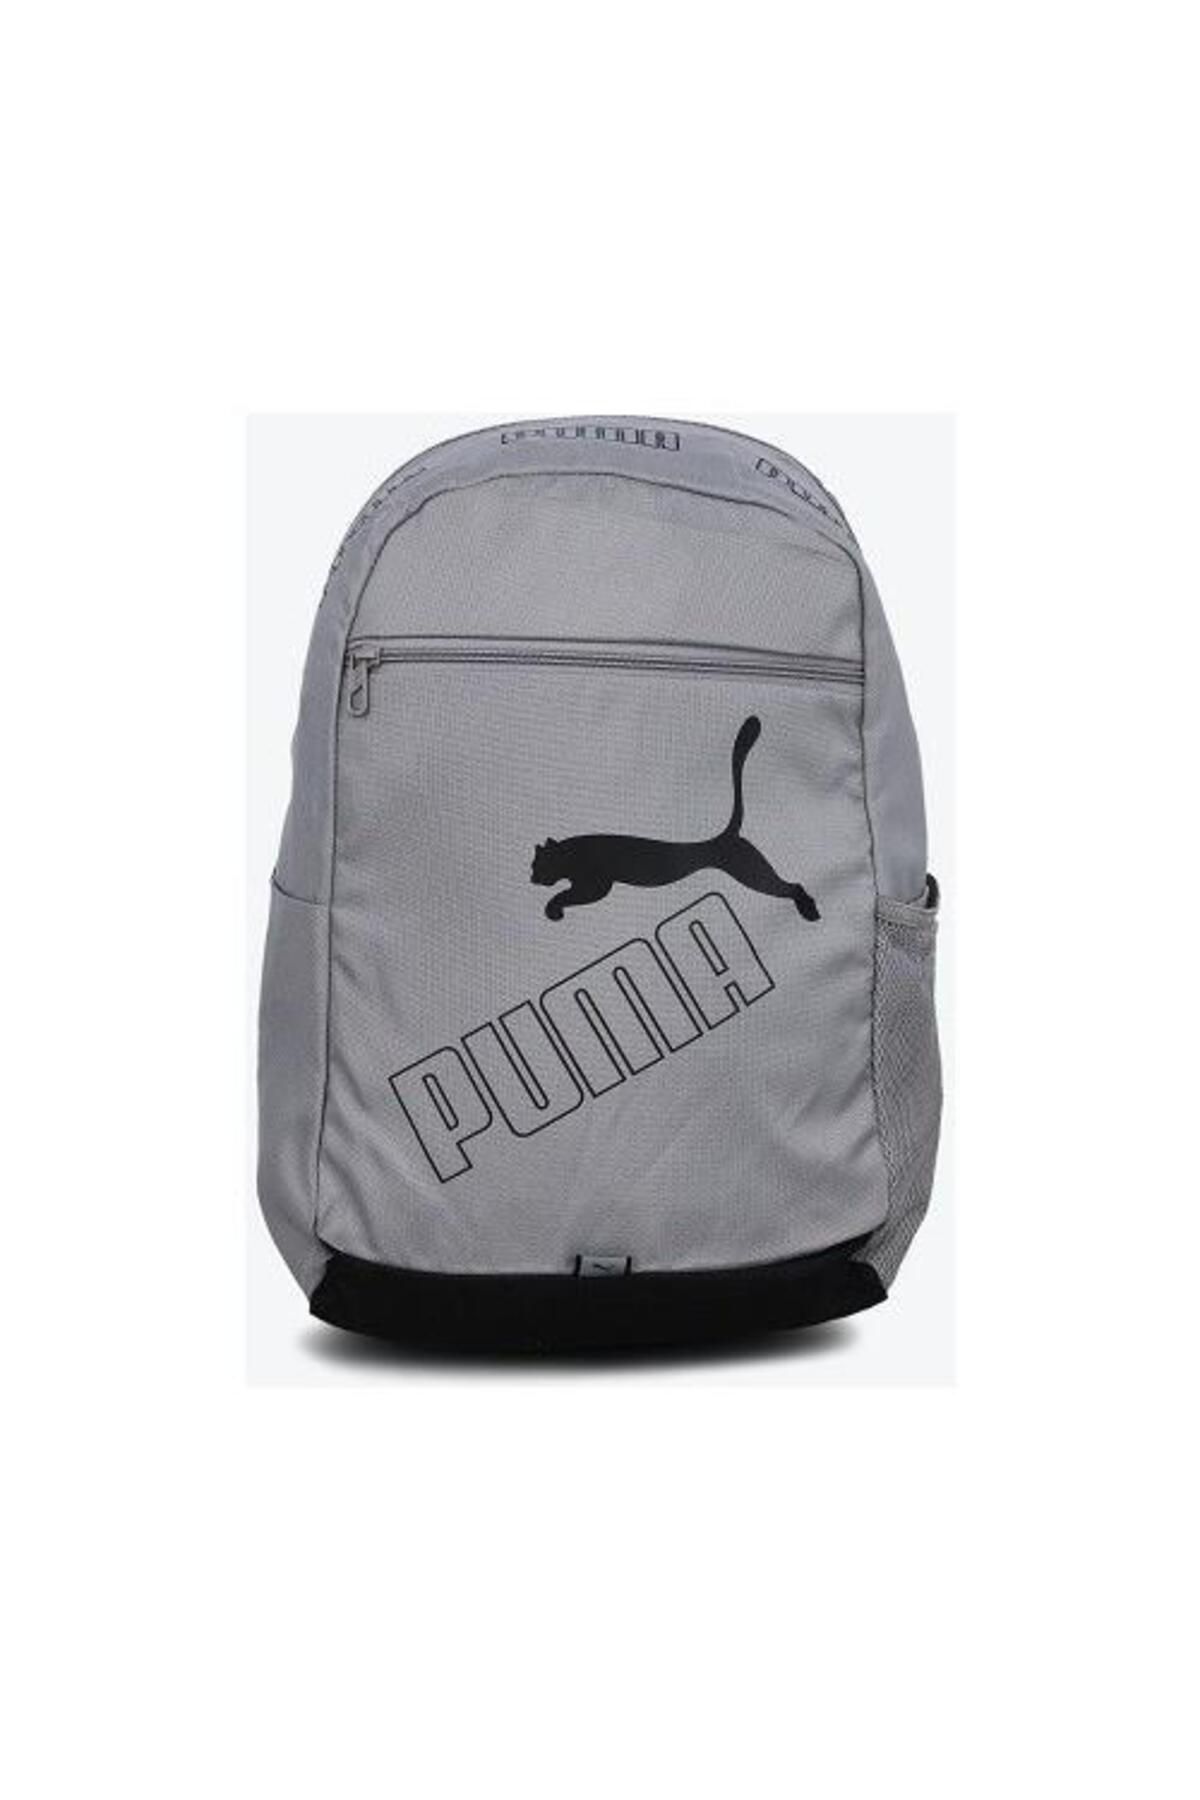 Puma Phase Backpack 077295 83 Unisex Okul Gezi Sırt Çantası